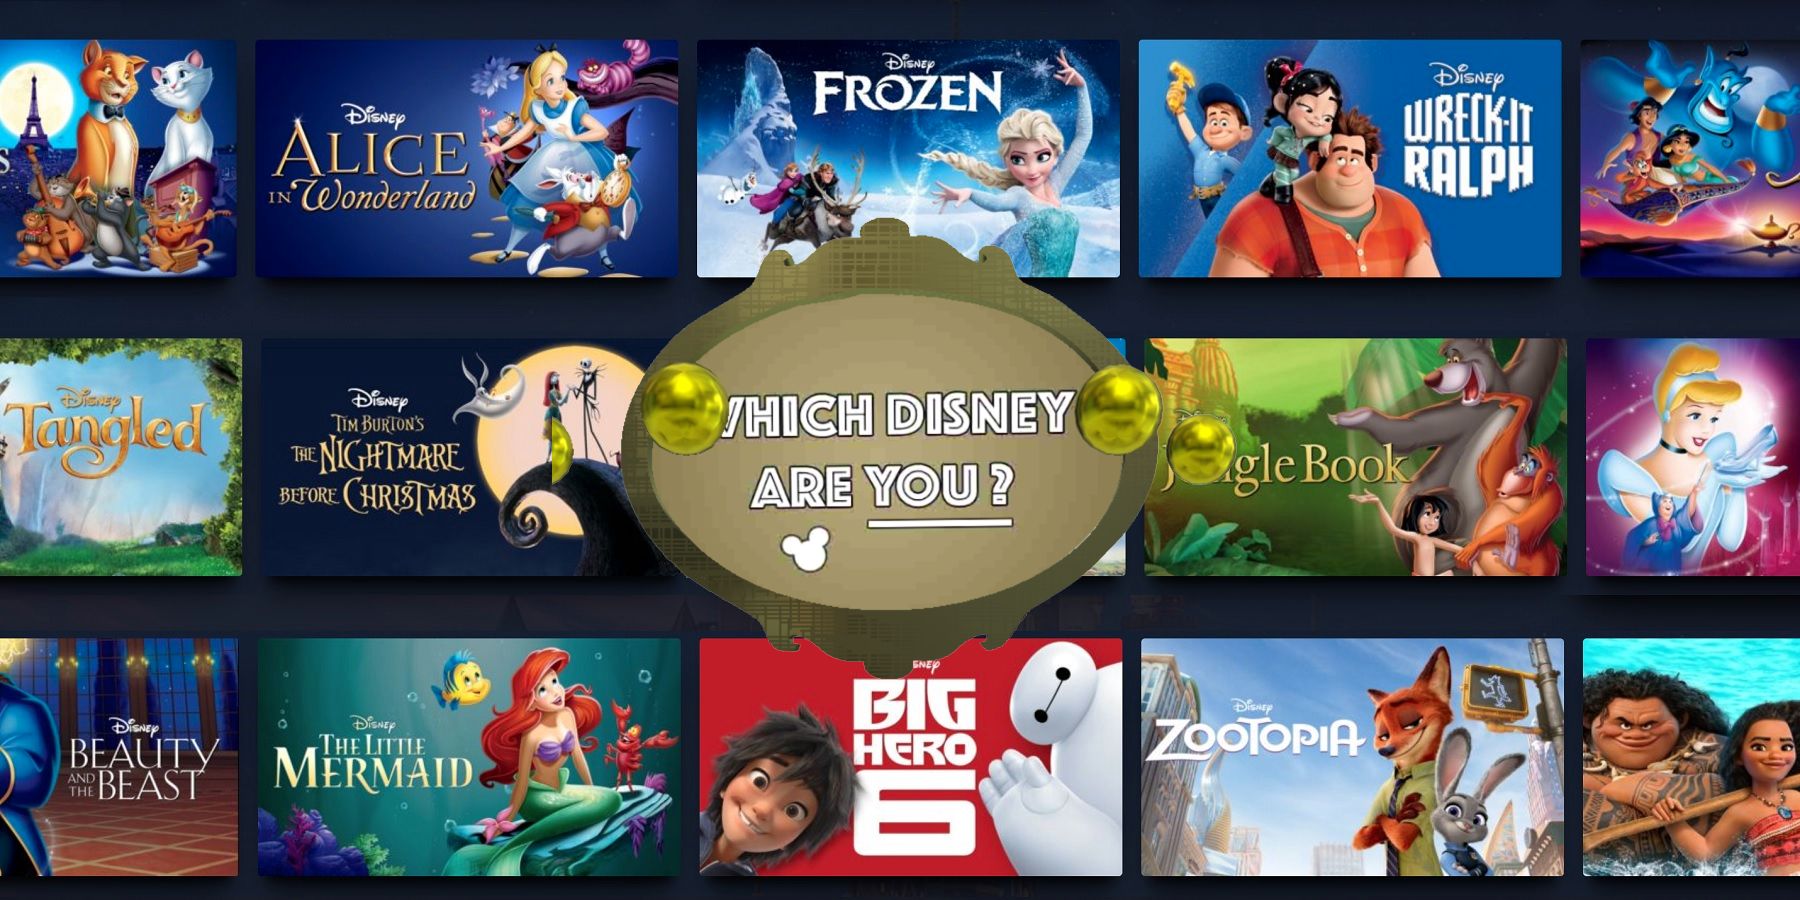 Disney Character Tik Tok Filter 🔥 - YouTube
 |Tiktok Disney Character Filter